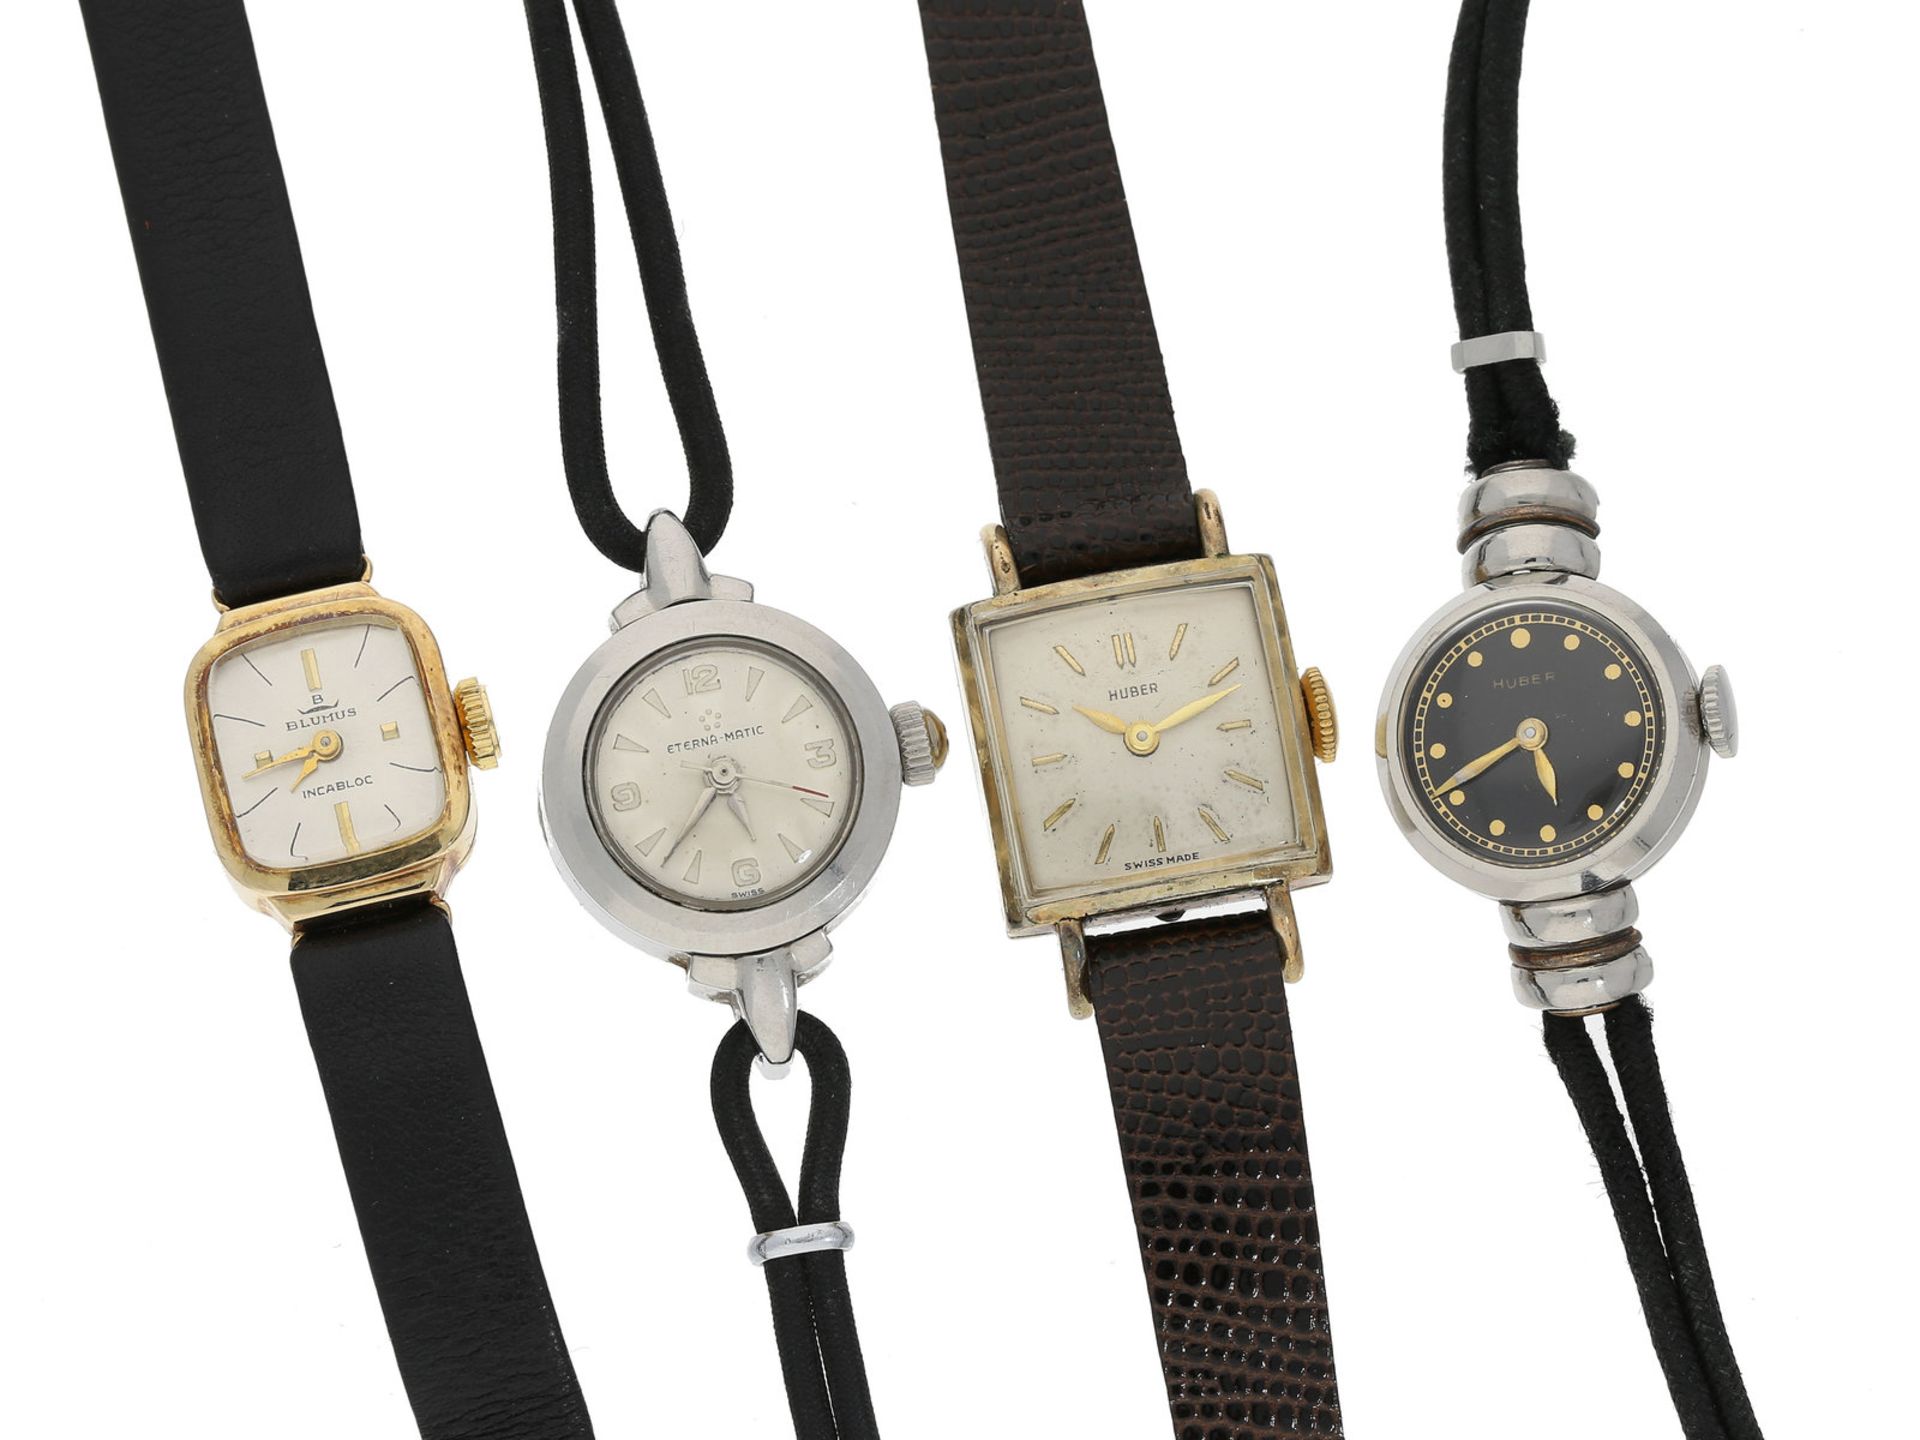 Armbanduhr: Konvolut aus 4 vintage Damenuhren, um 1945-19551. Art déco Damenuhr mit S